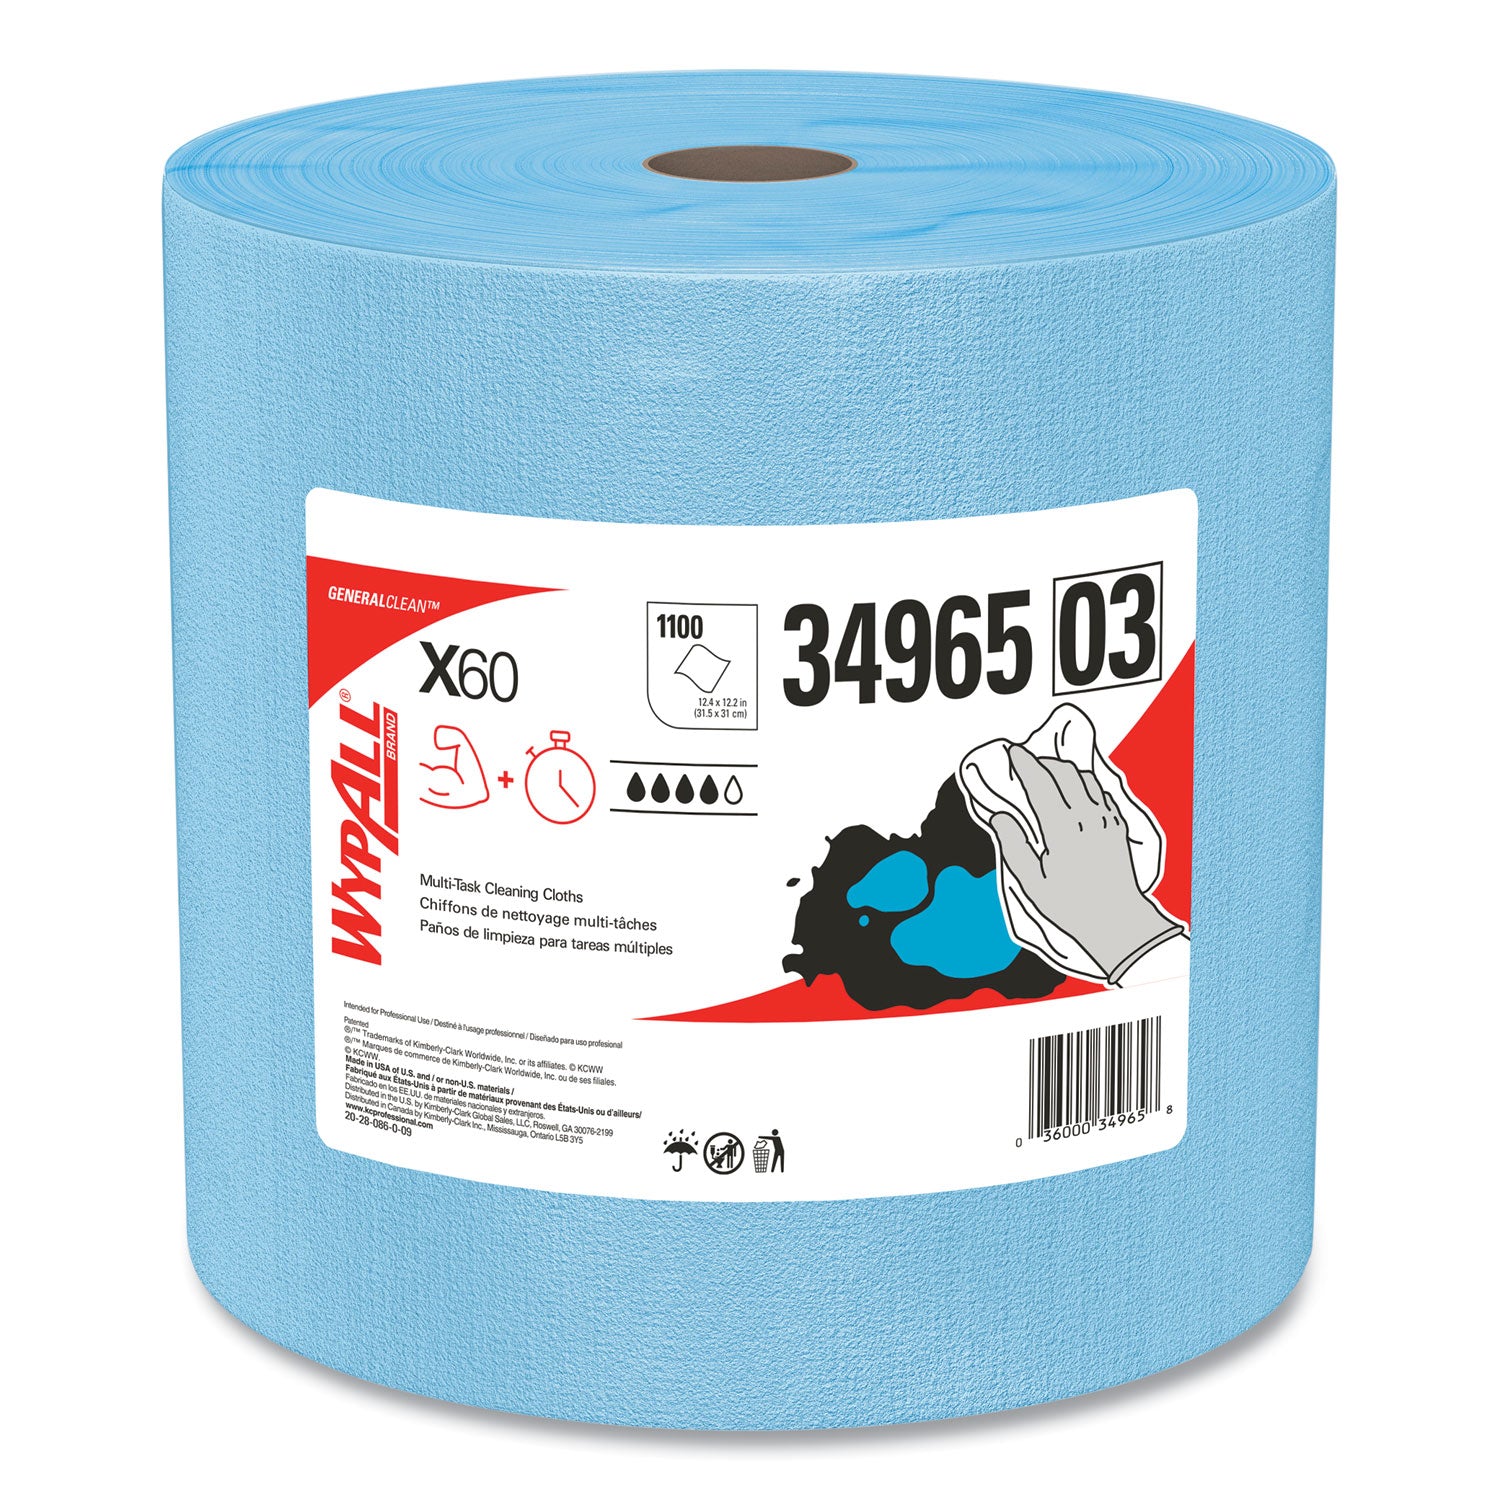 General Clean X60 Cloths, Jumbo Roll, 12.5 x 13.4, Blue, 1,100/Roll - 